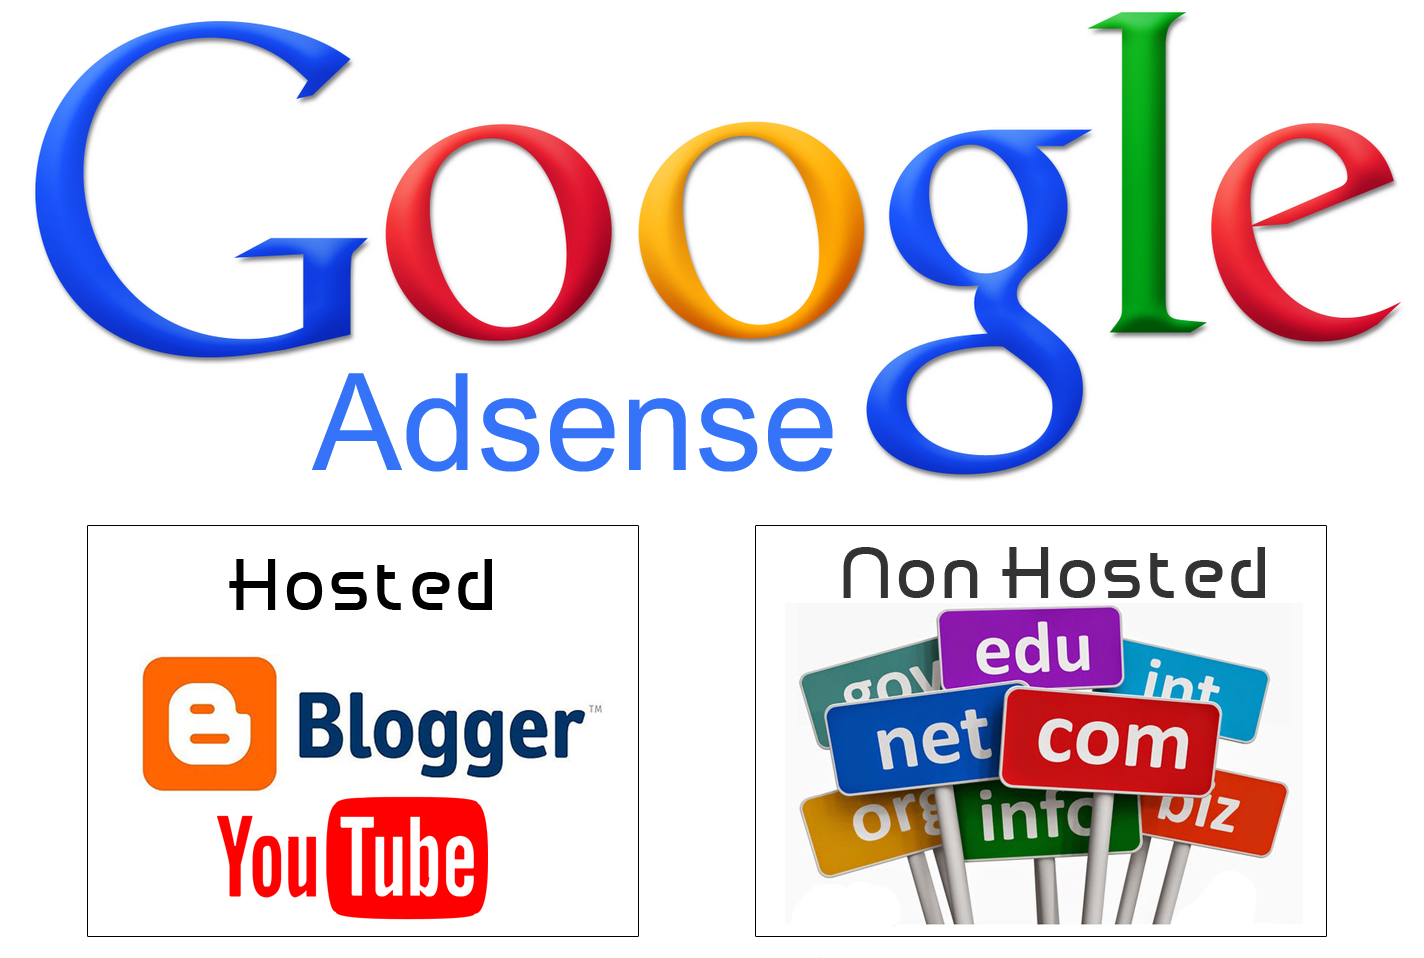 Google host. Гугл адсенс. Adsense. Адсенс. Google approved.